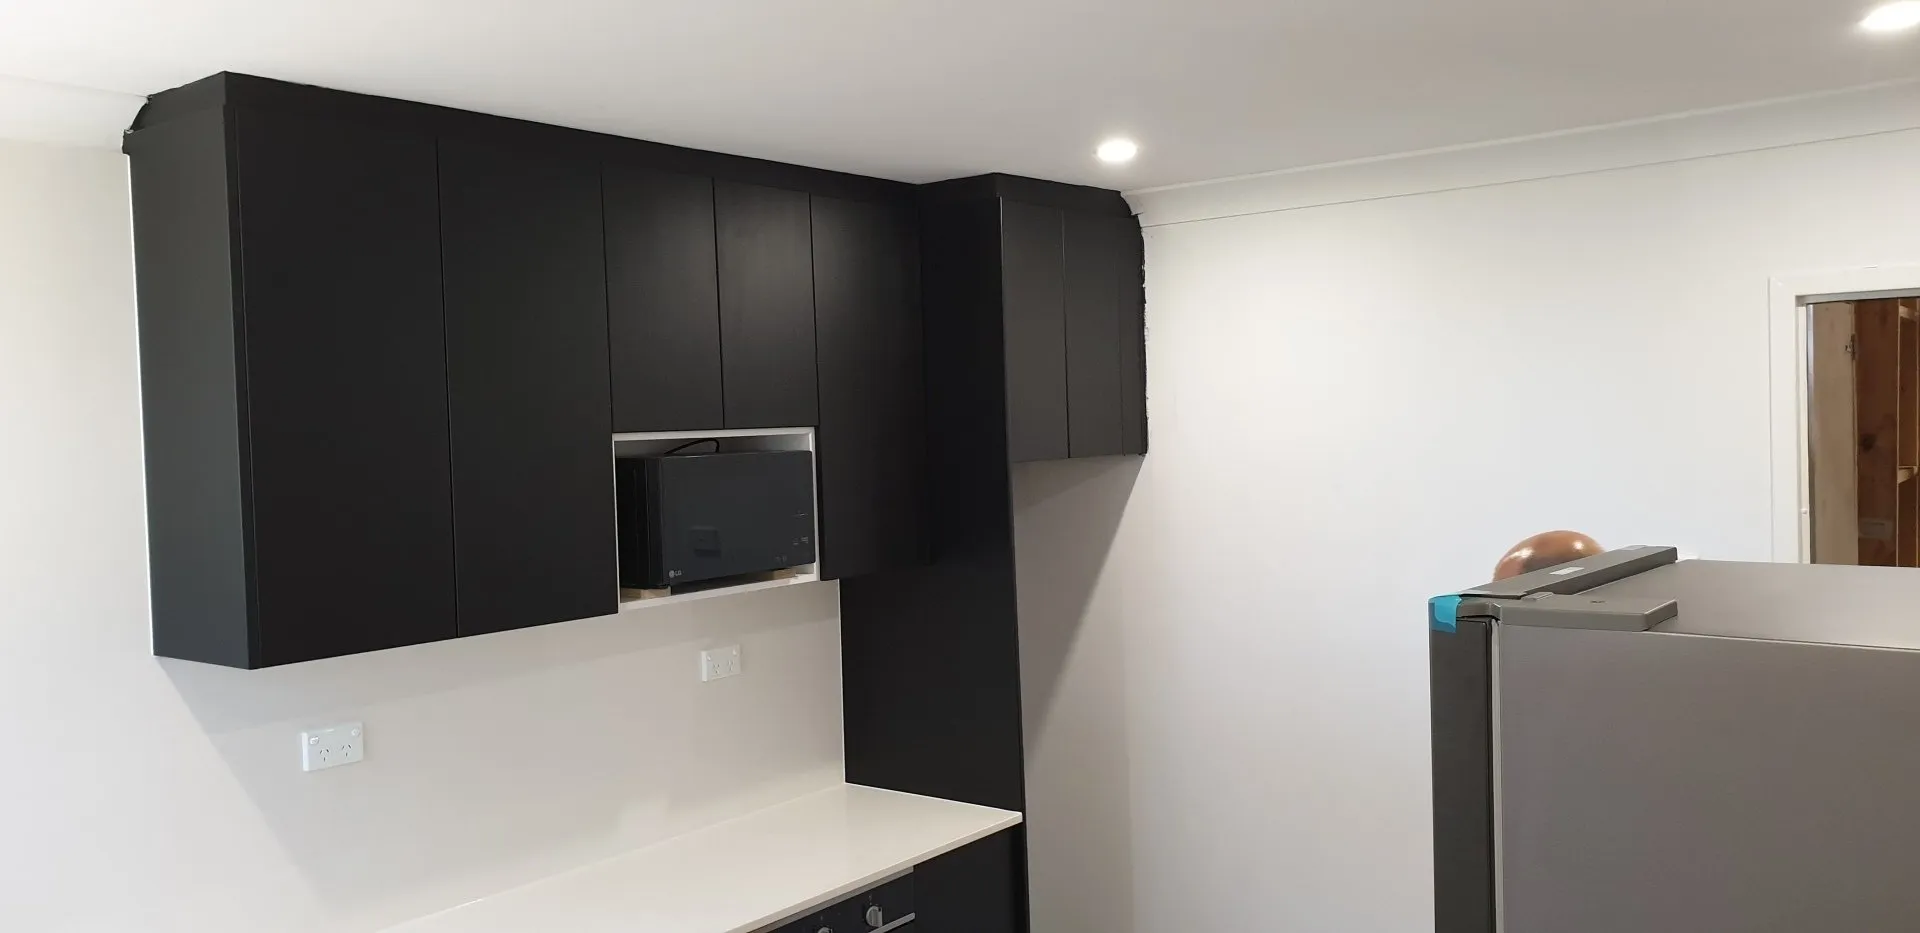 Kitchen With Sleek Black Cabinets